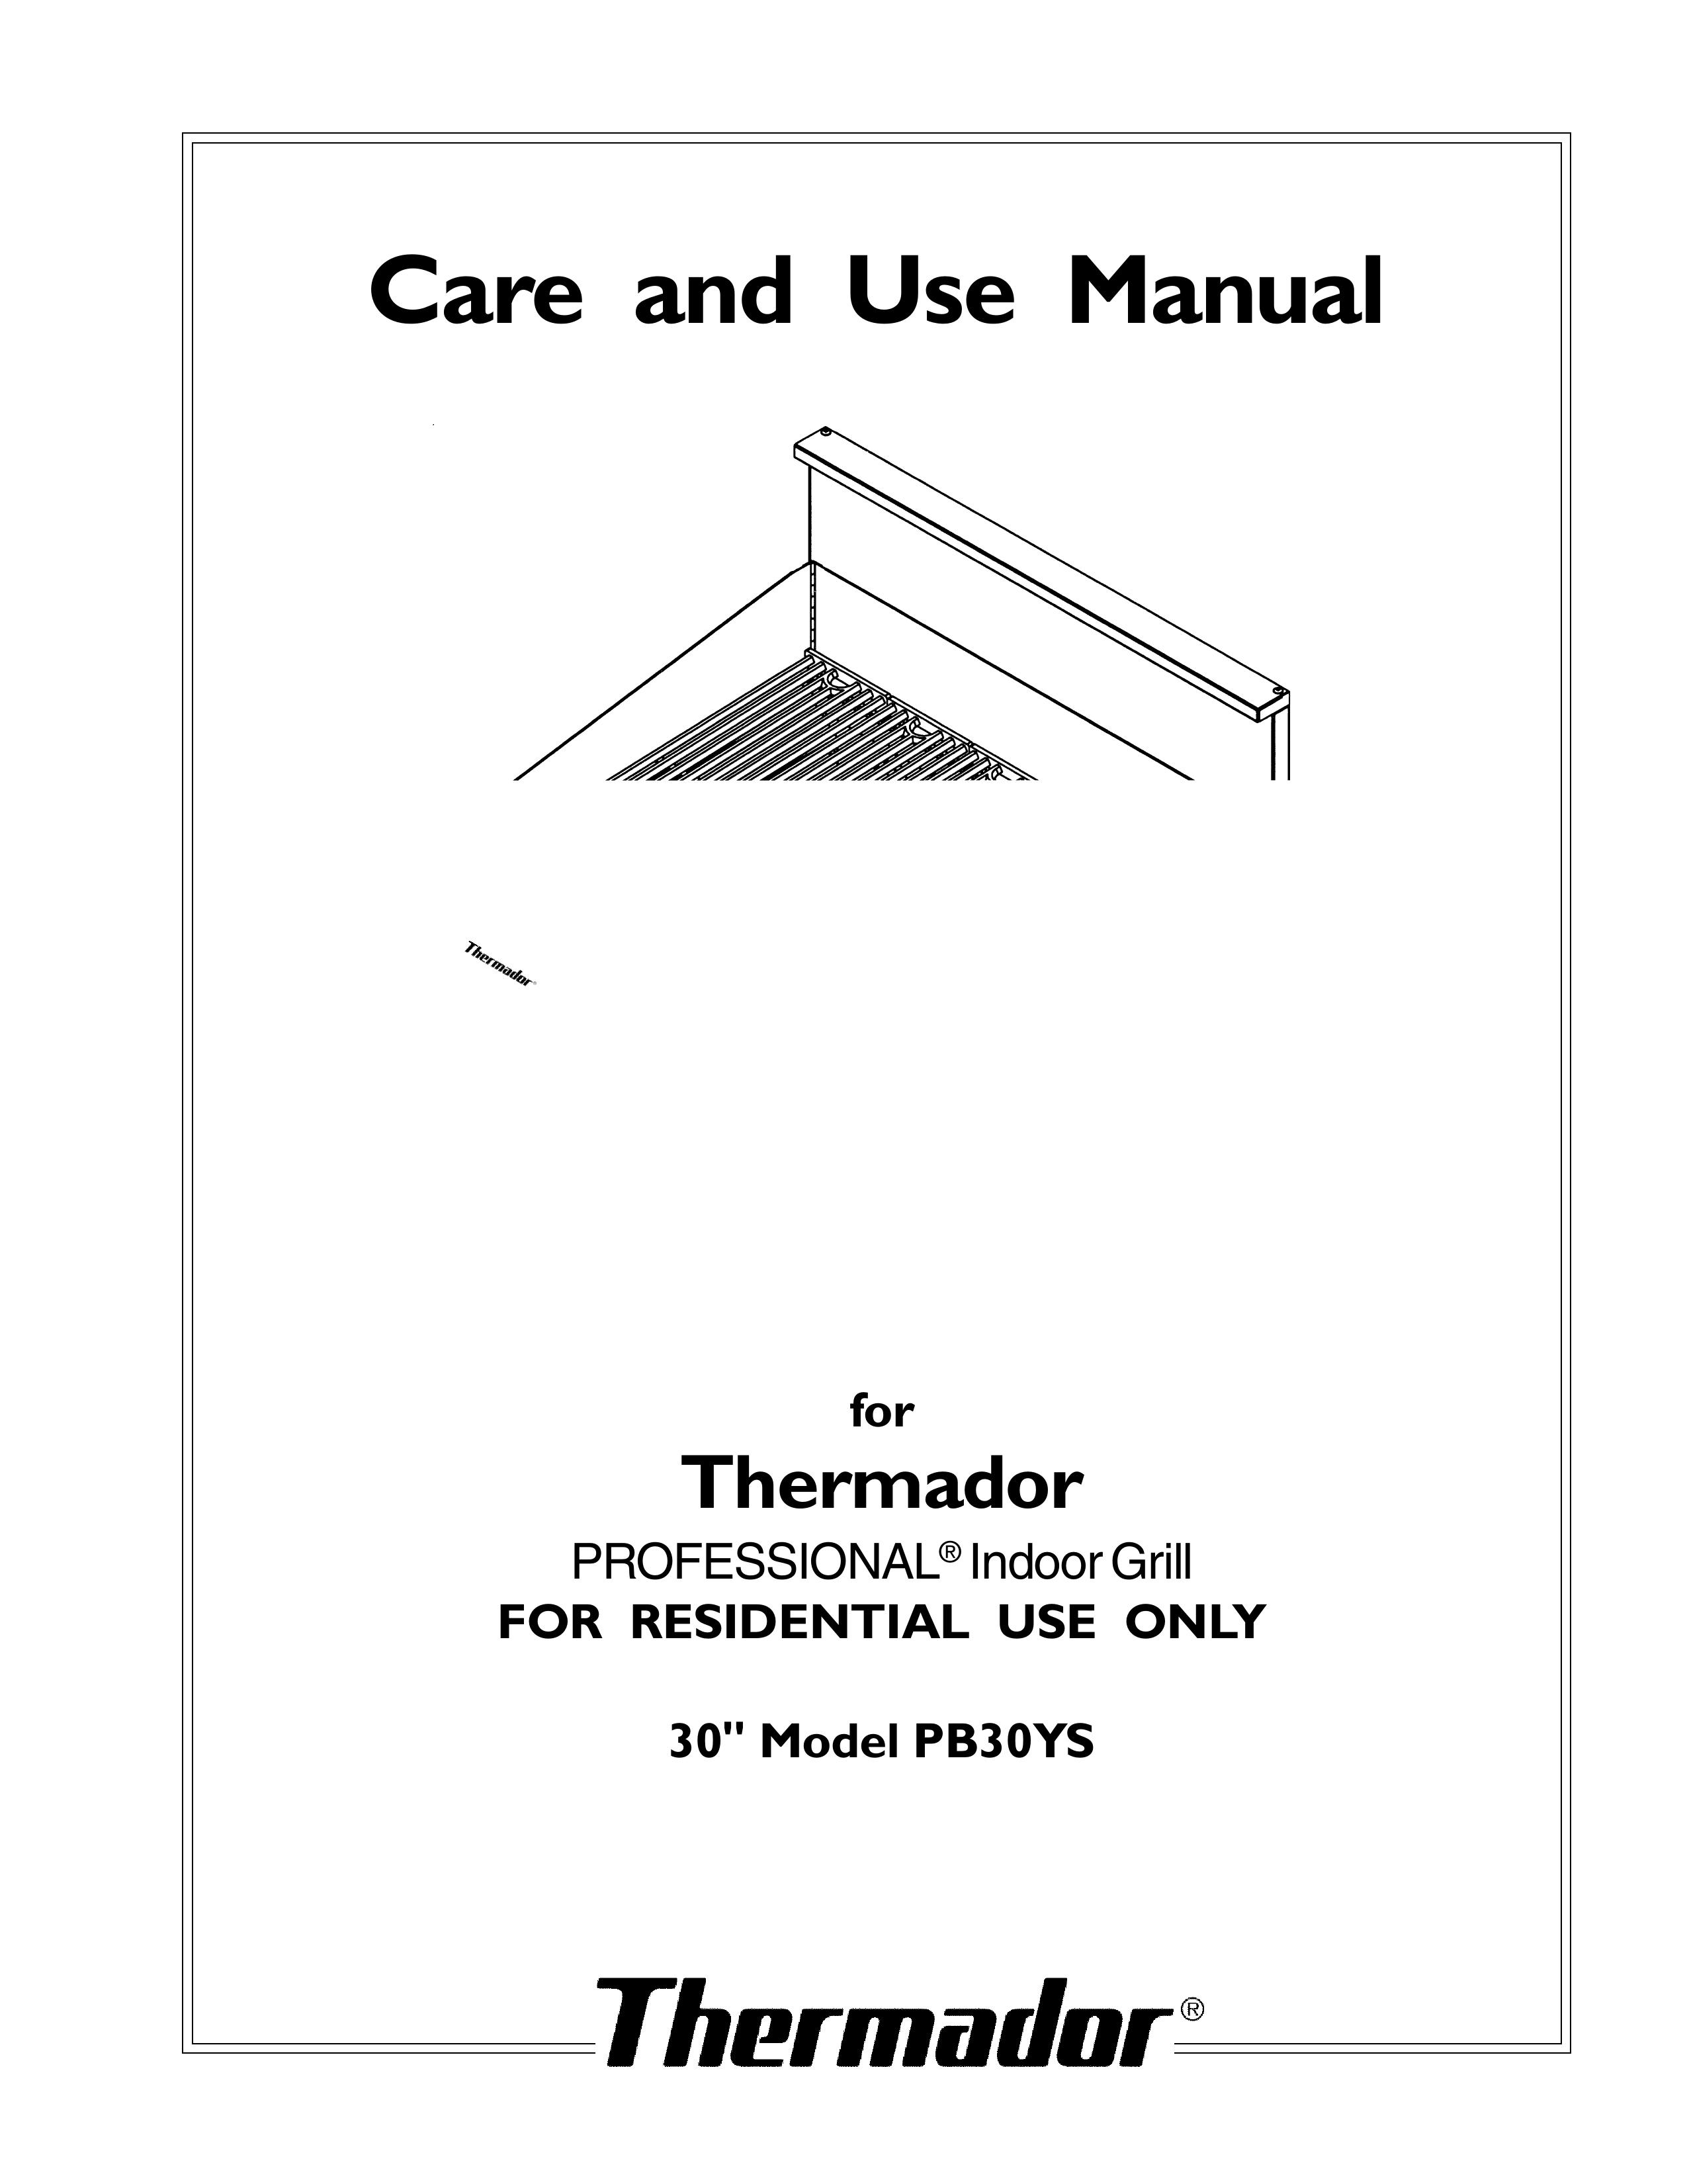 Thermador PB30YS Gas Grill User Manual